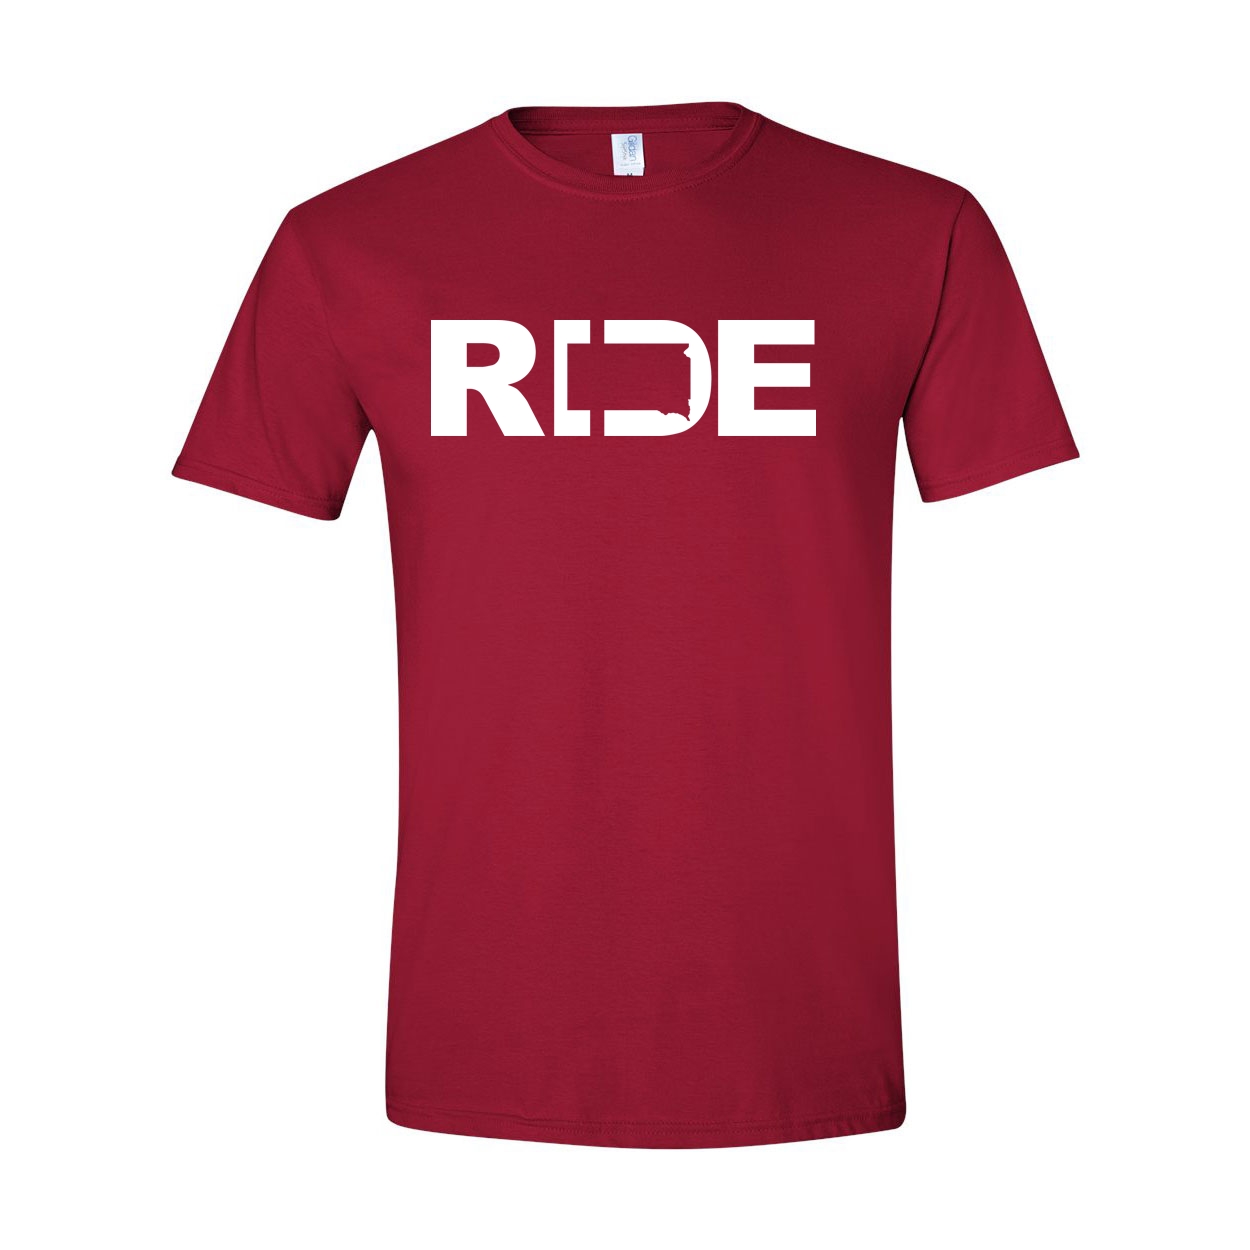 Ride South Dakota Classic T-Shirt Cardinal Red (White Logo)